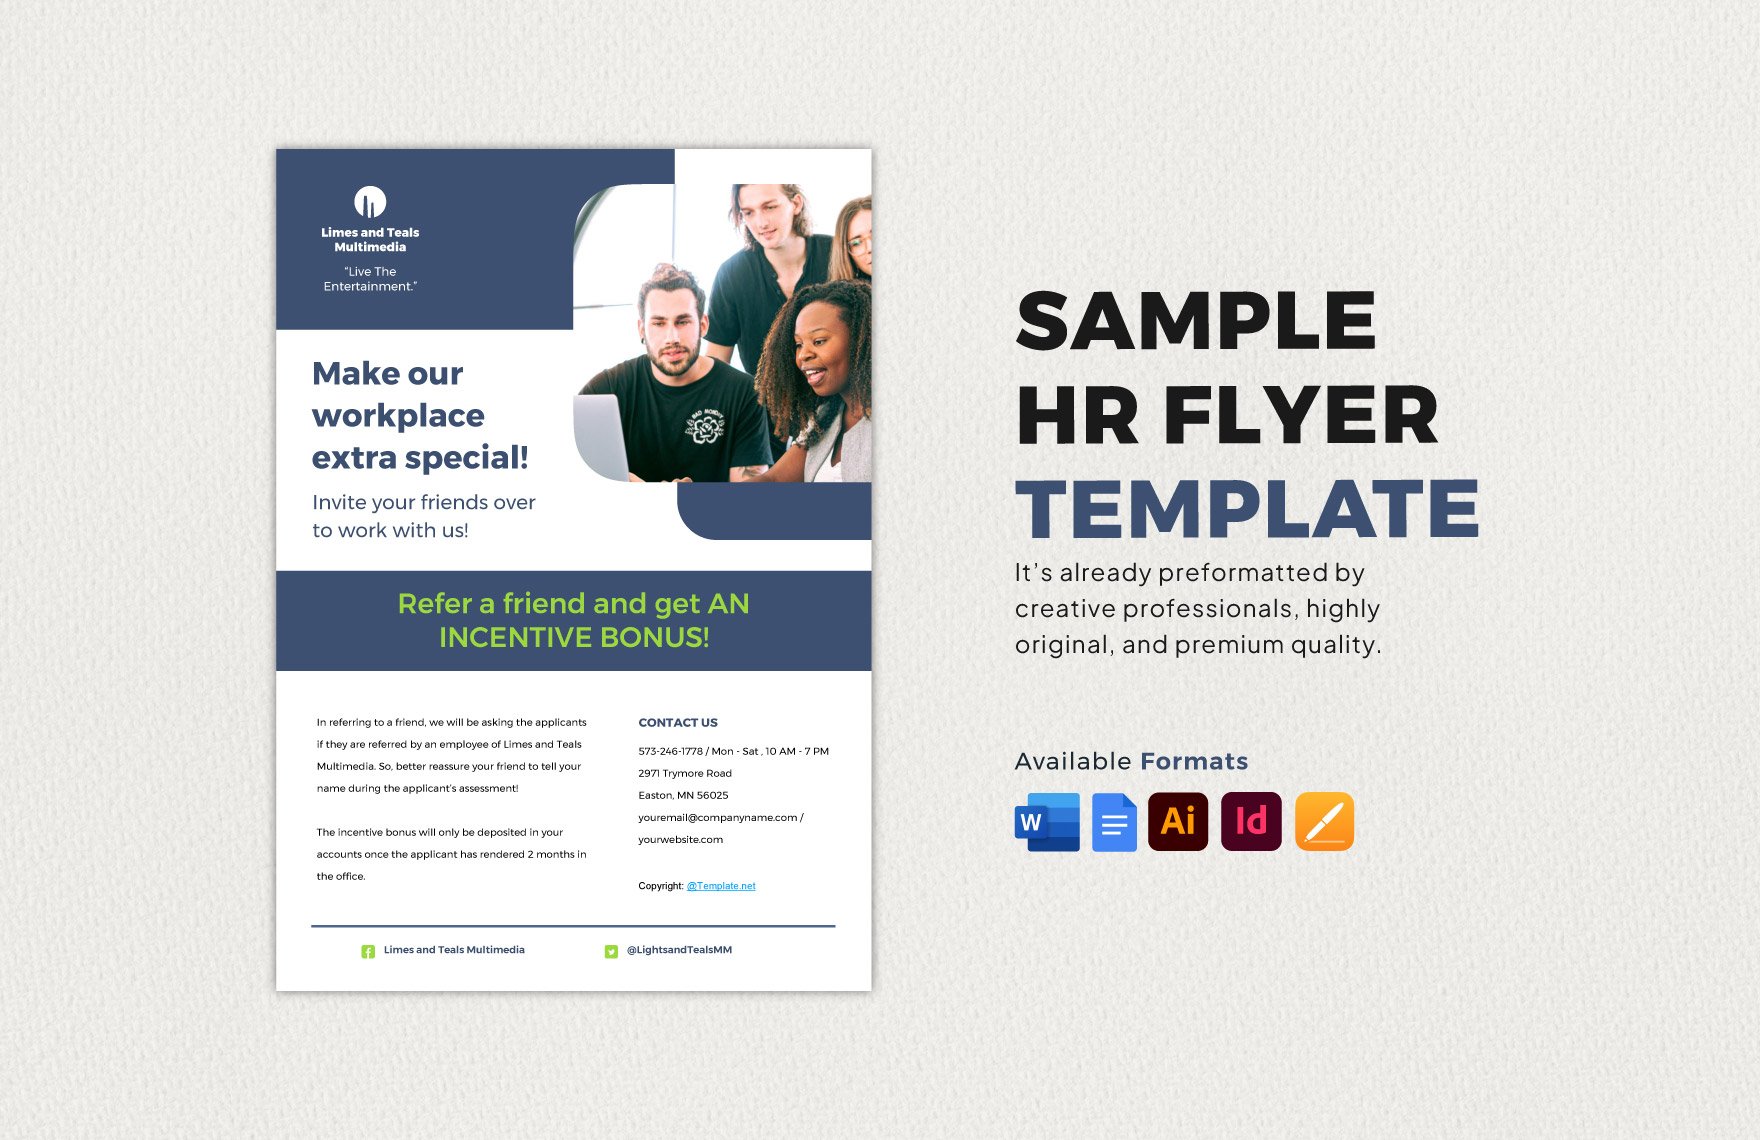 Sample HR Flyer Template